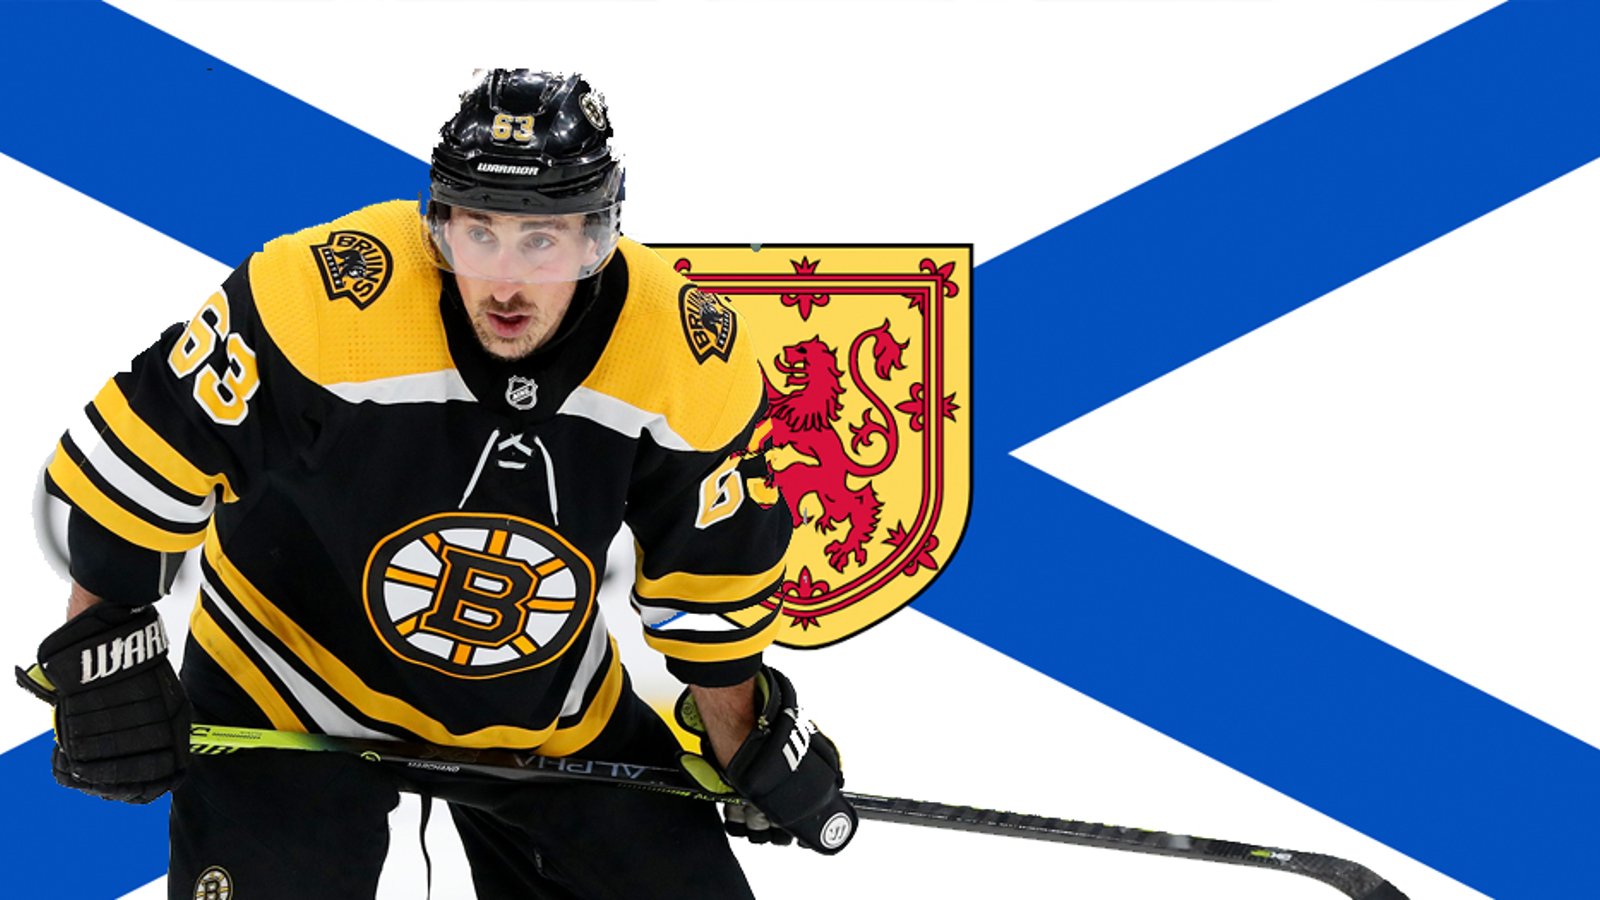 Marchand sends a heart-felt message to his native province of Nova Scotia